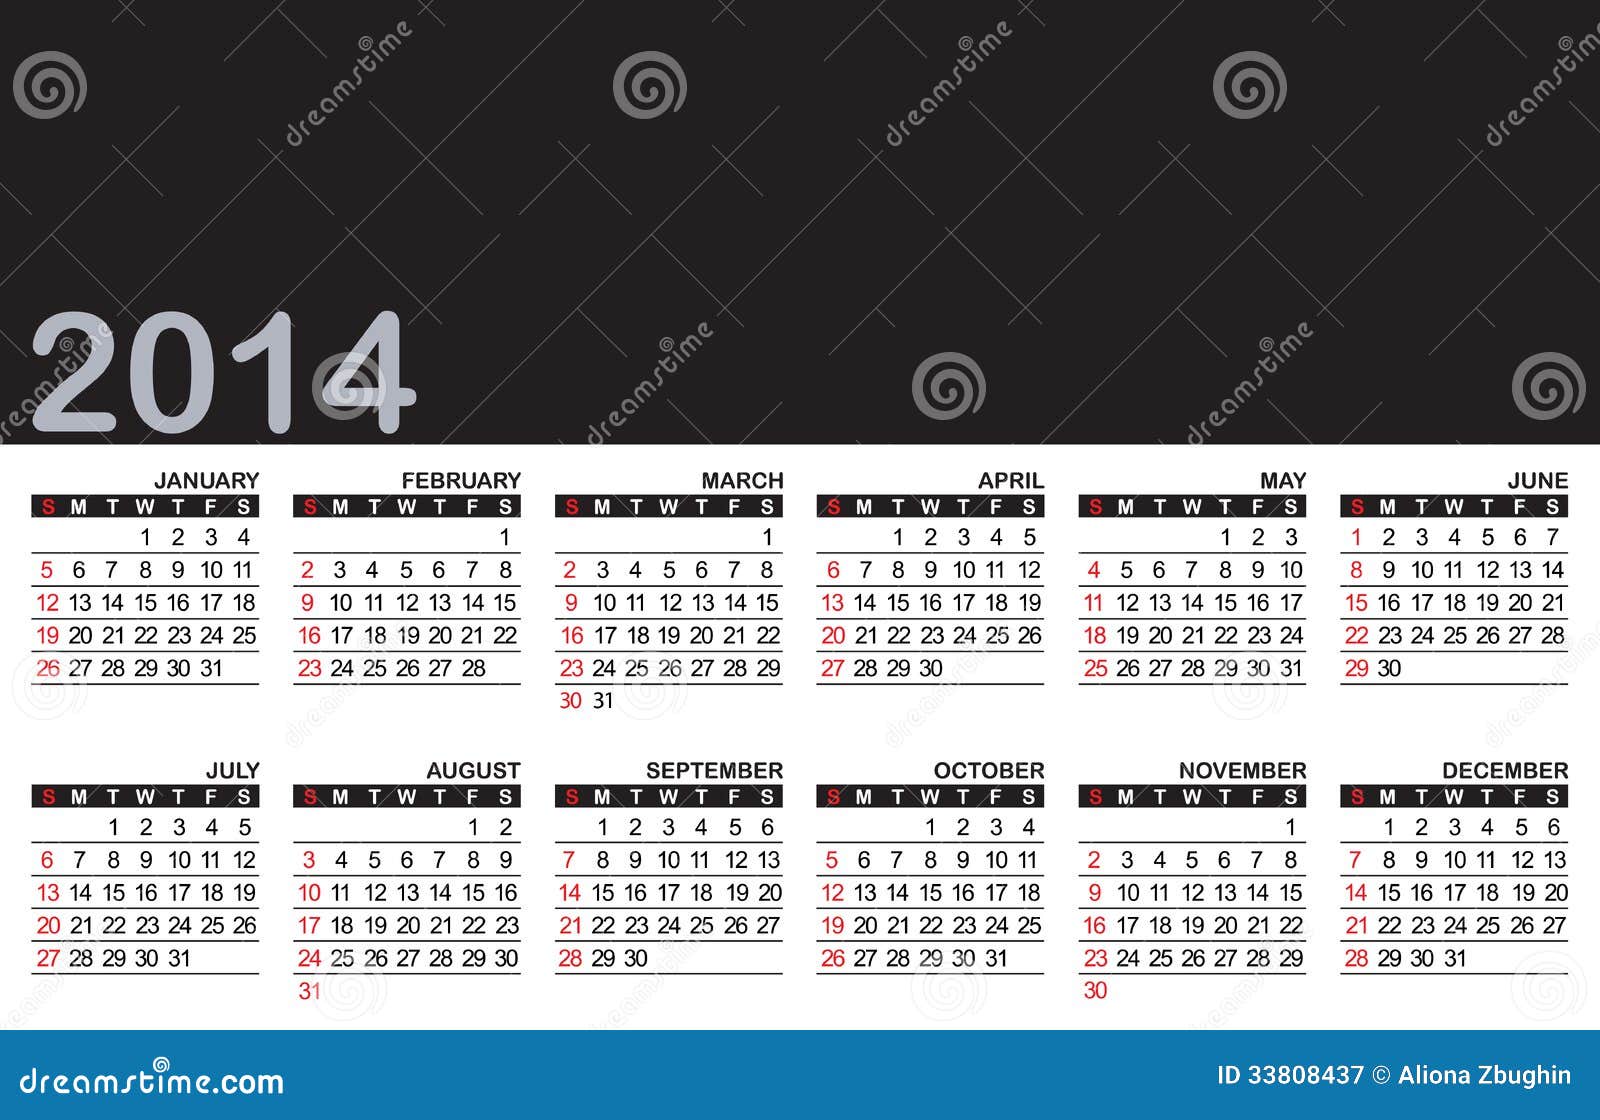 Calendar 2014 Royalty Free Stock Photography - Image: 33808437